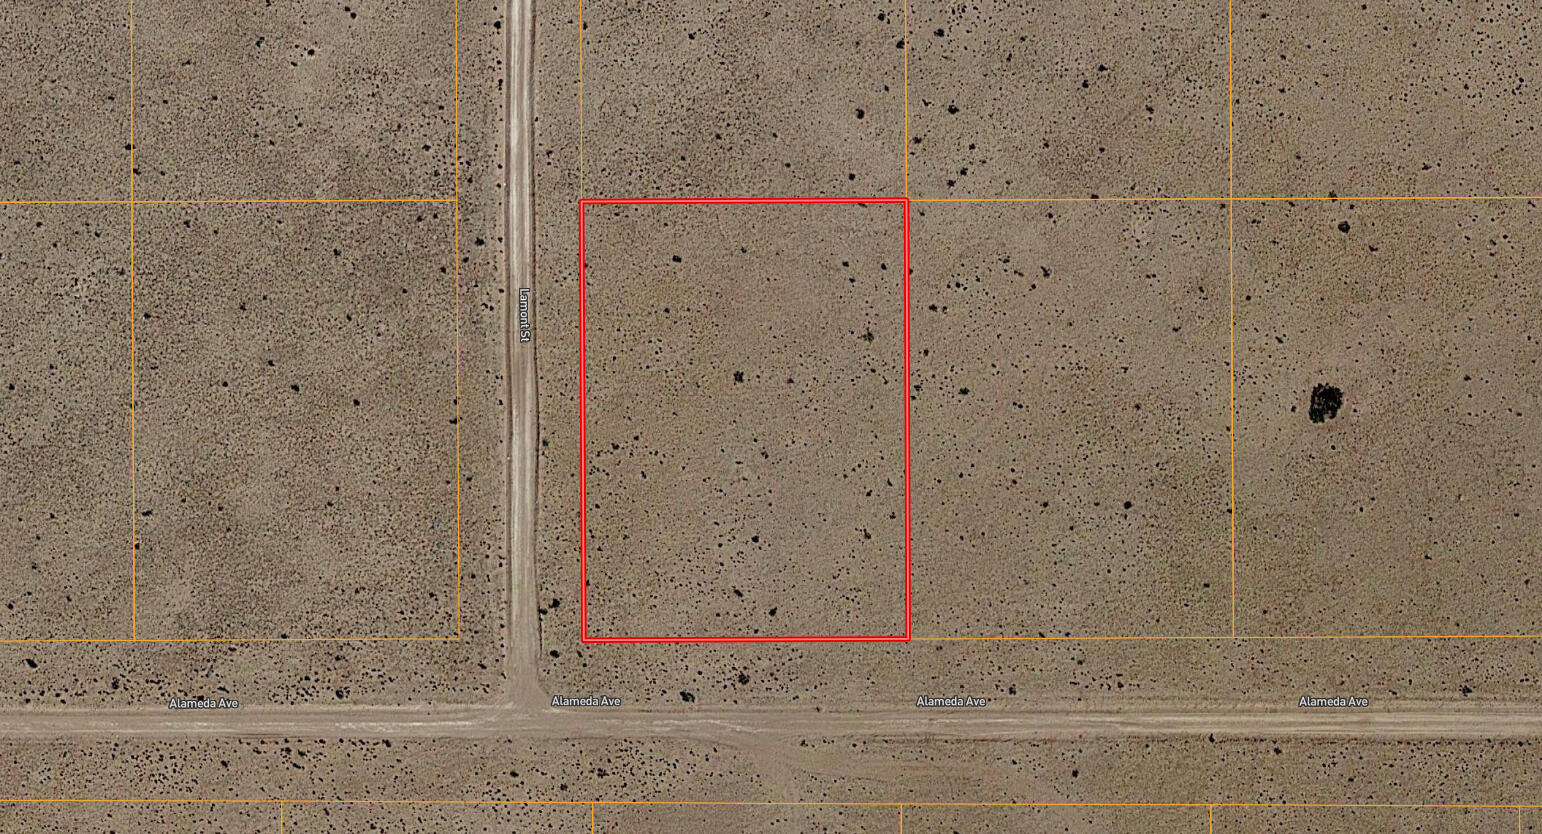 Lot 30 Lamont Street, Veguita, New Mexico 87062, ,Land,For Sale,Lot 30 Lamont Street,1030564